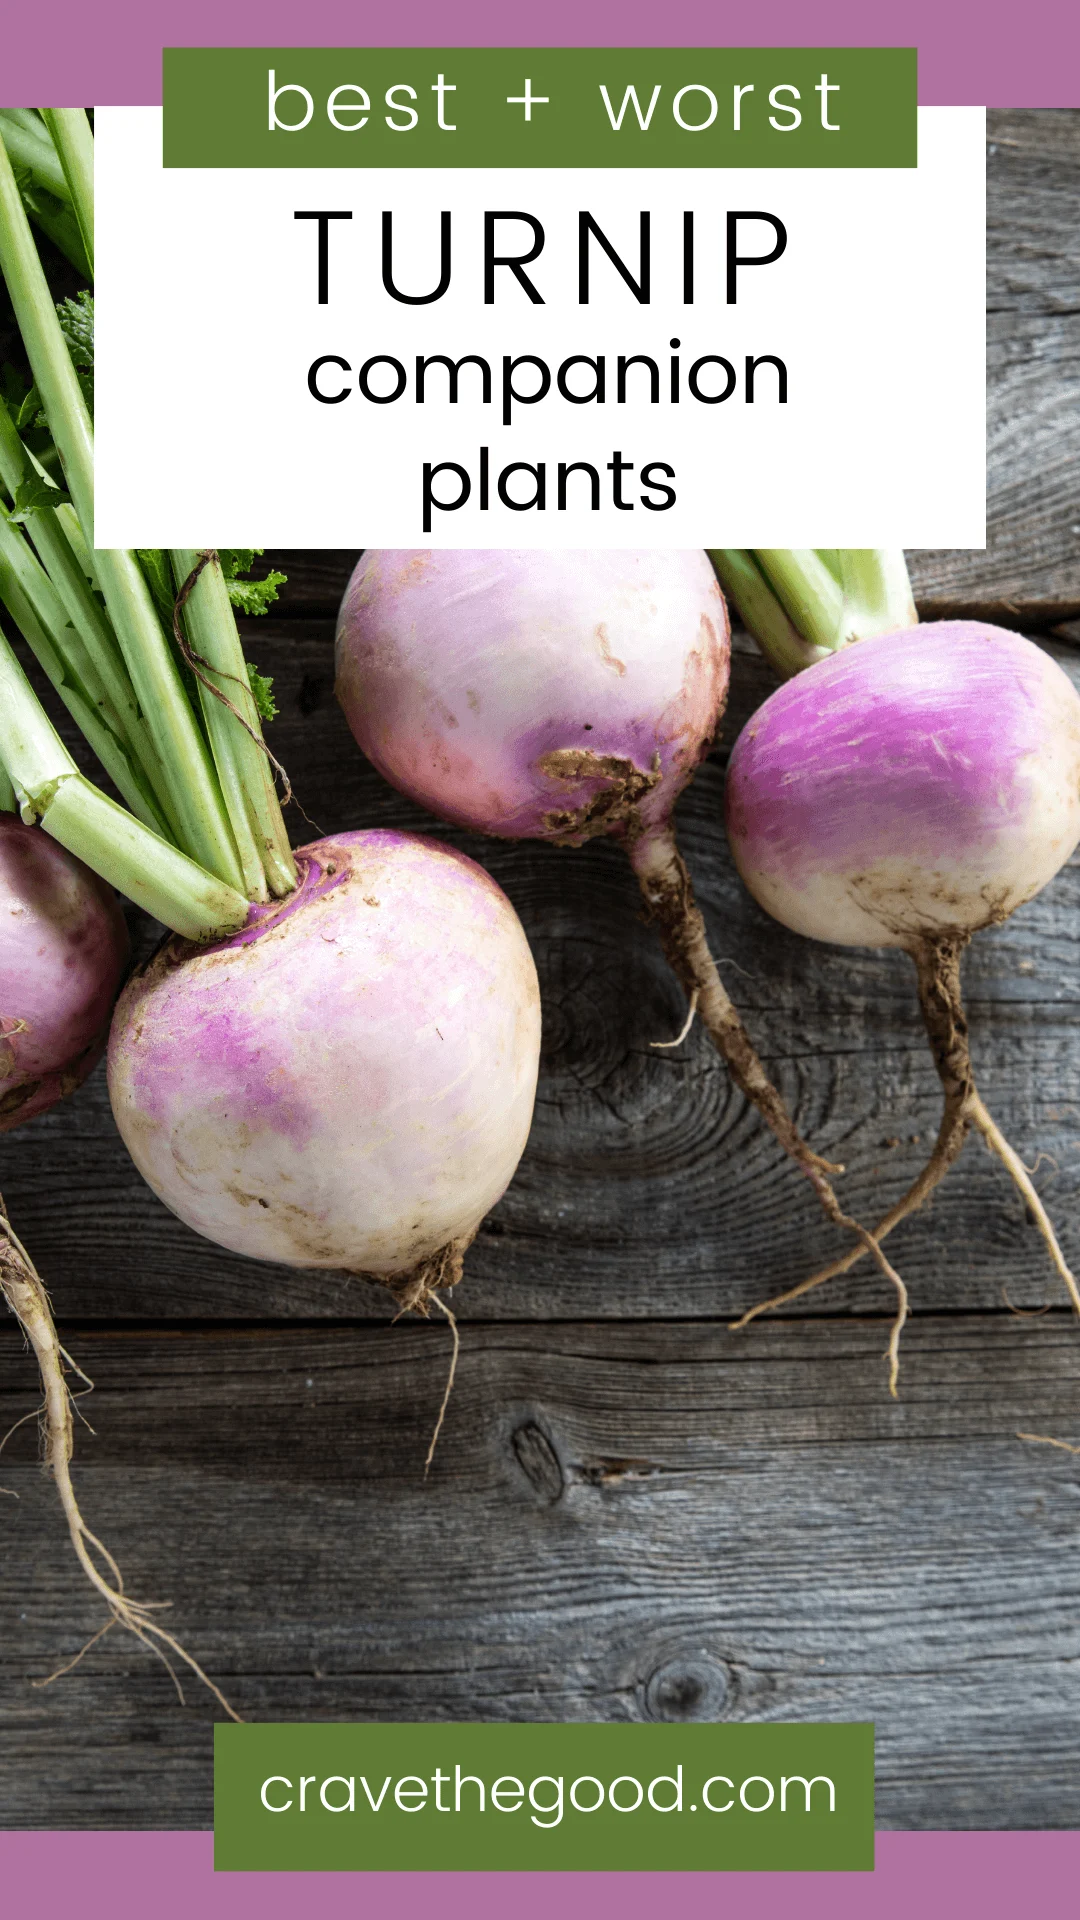 Best and worst turnip companion plants pinterest graphic.